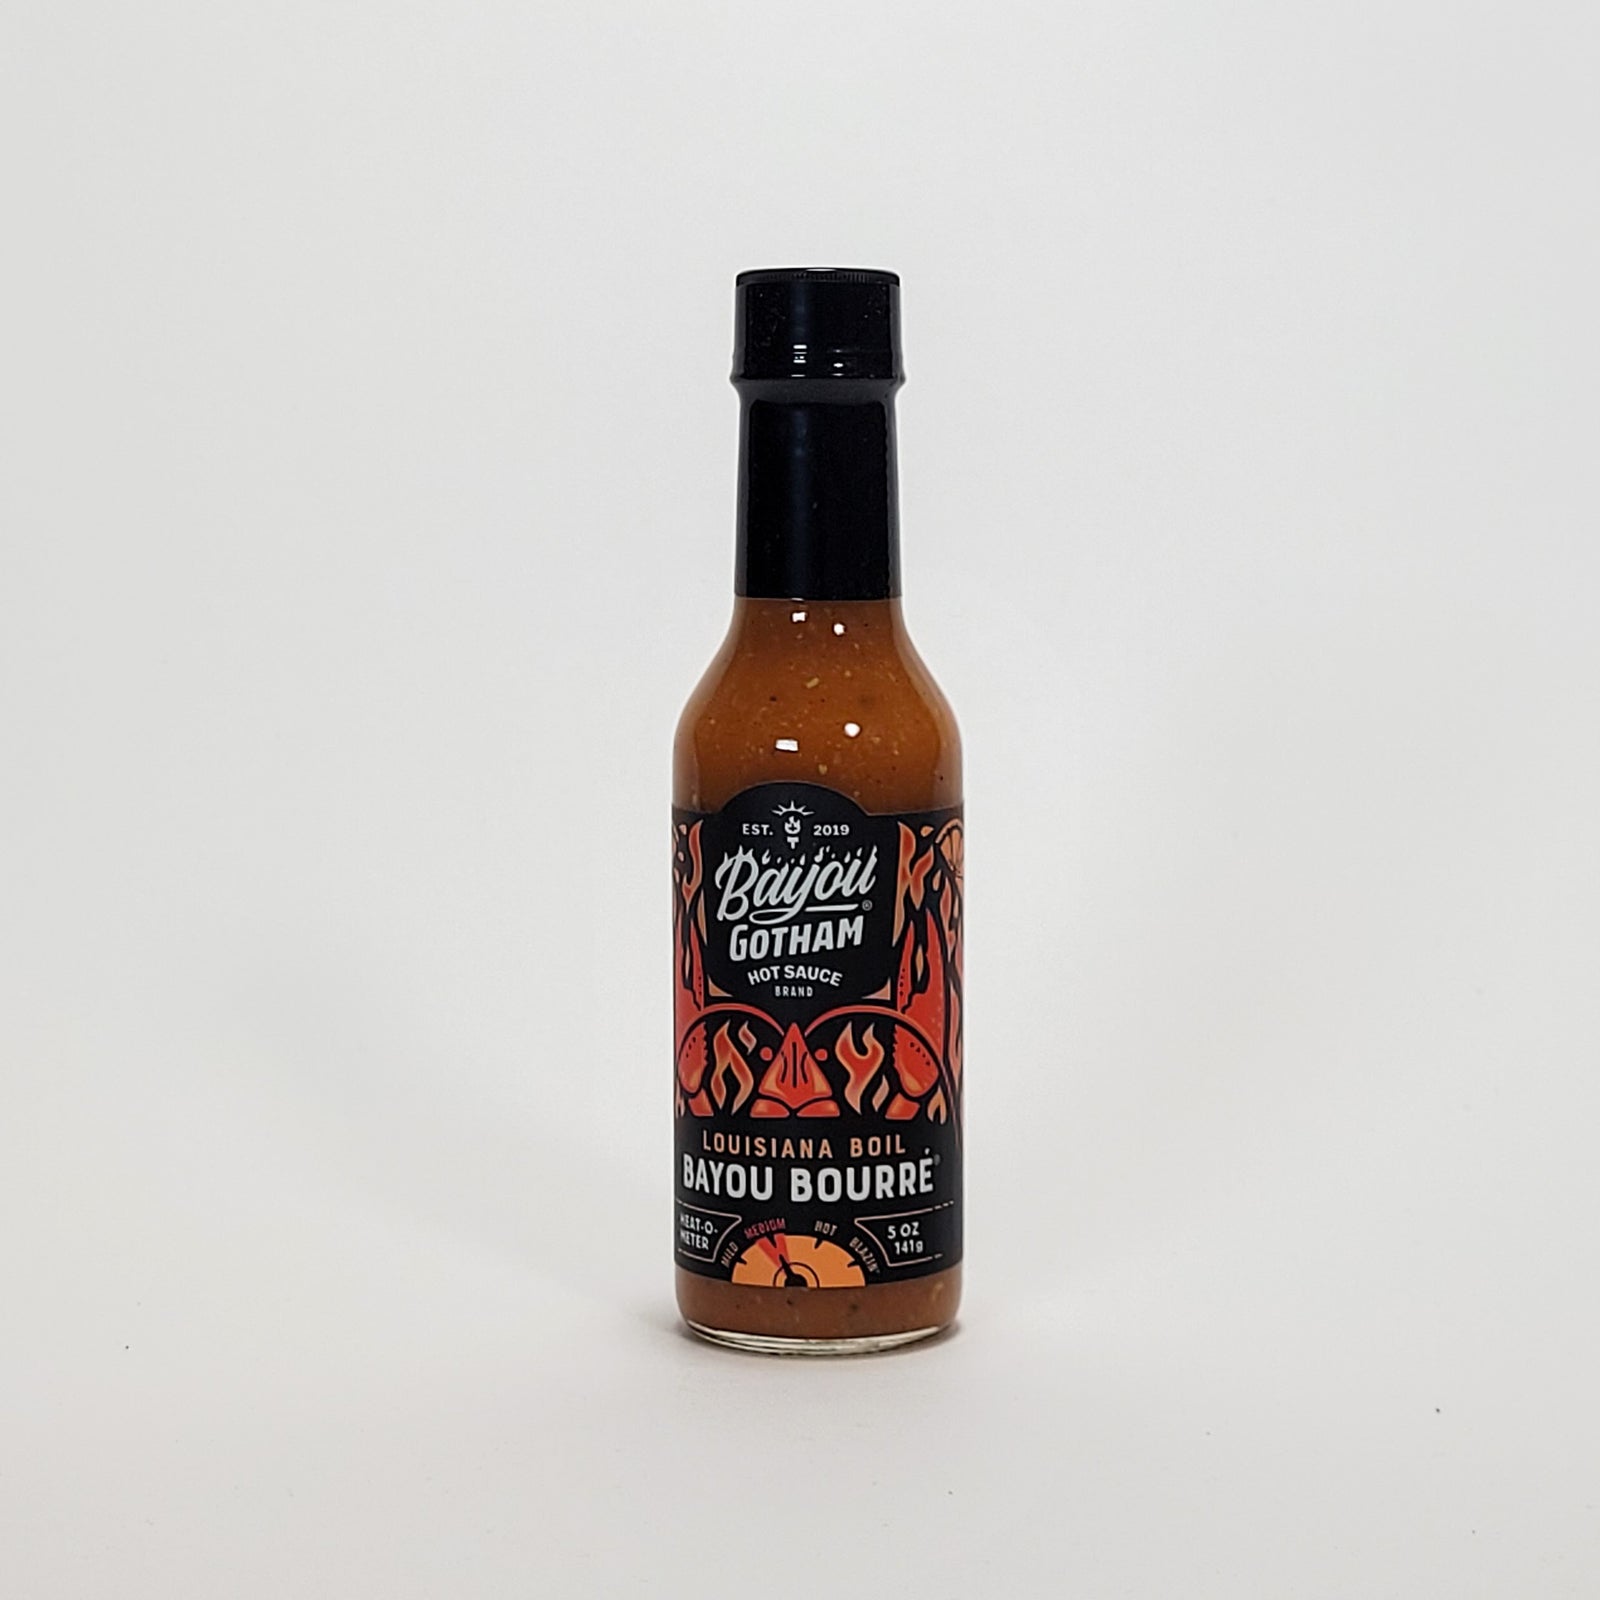 Private Label Hot Sauce - Louisiana Cayenne Hot Sauce, 5oz.